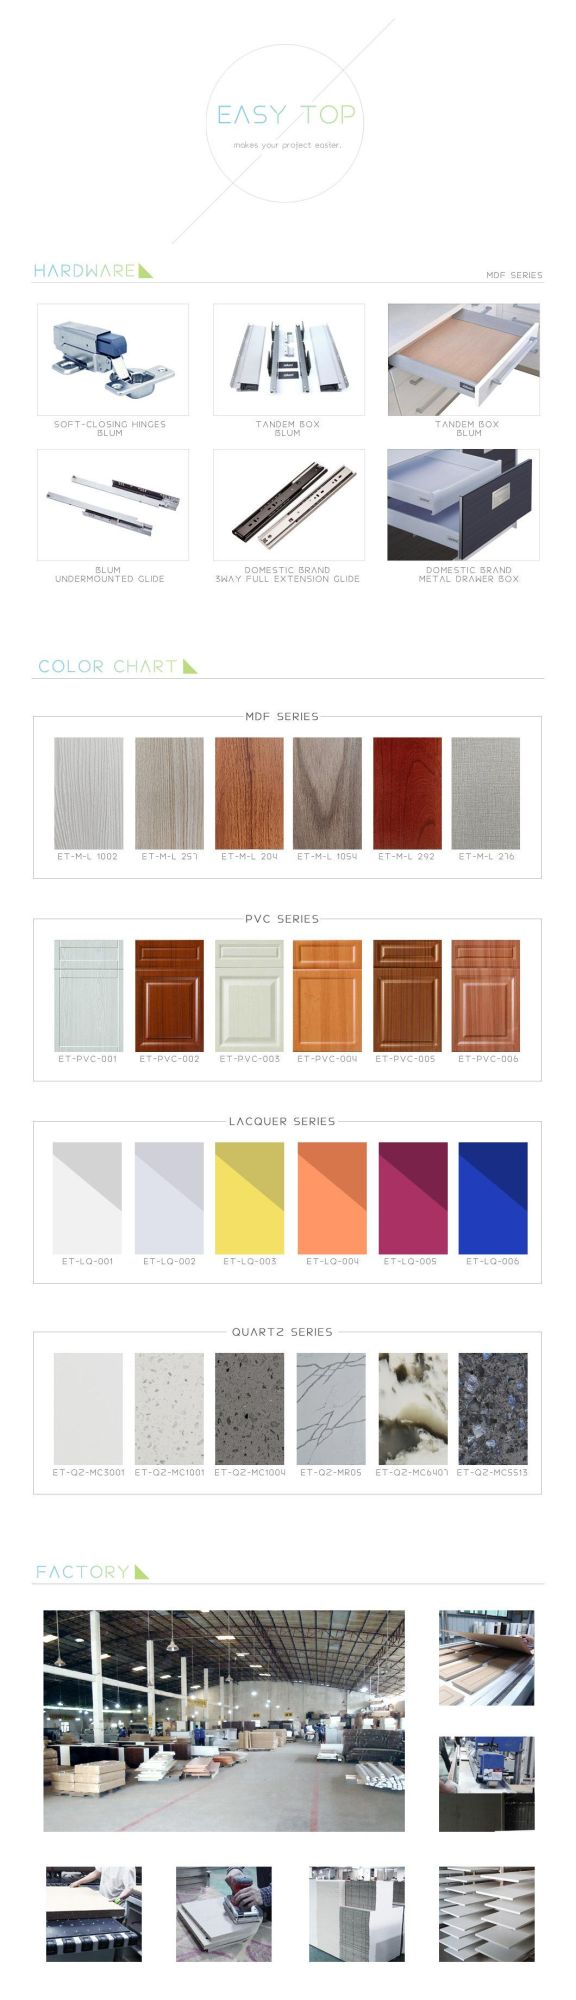 Italian Design Pantry Kitchen Cabinets Door with Blum Hardware and Quartz Stone Top Furniture